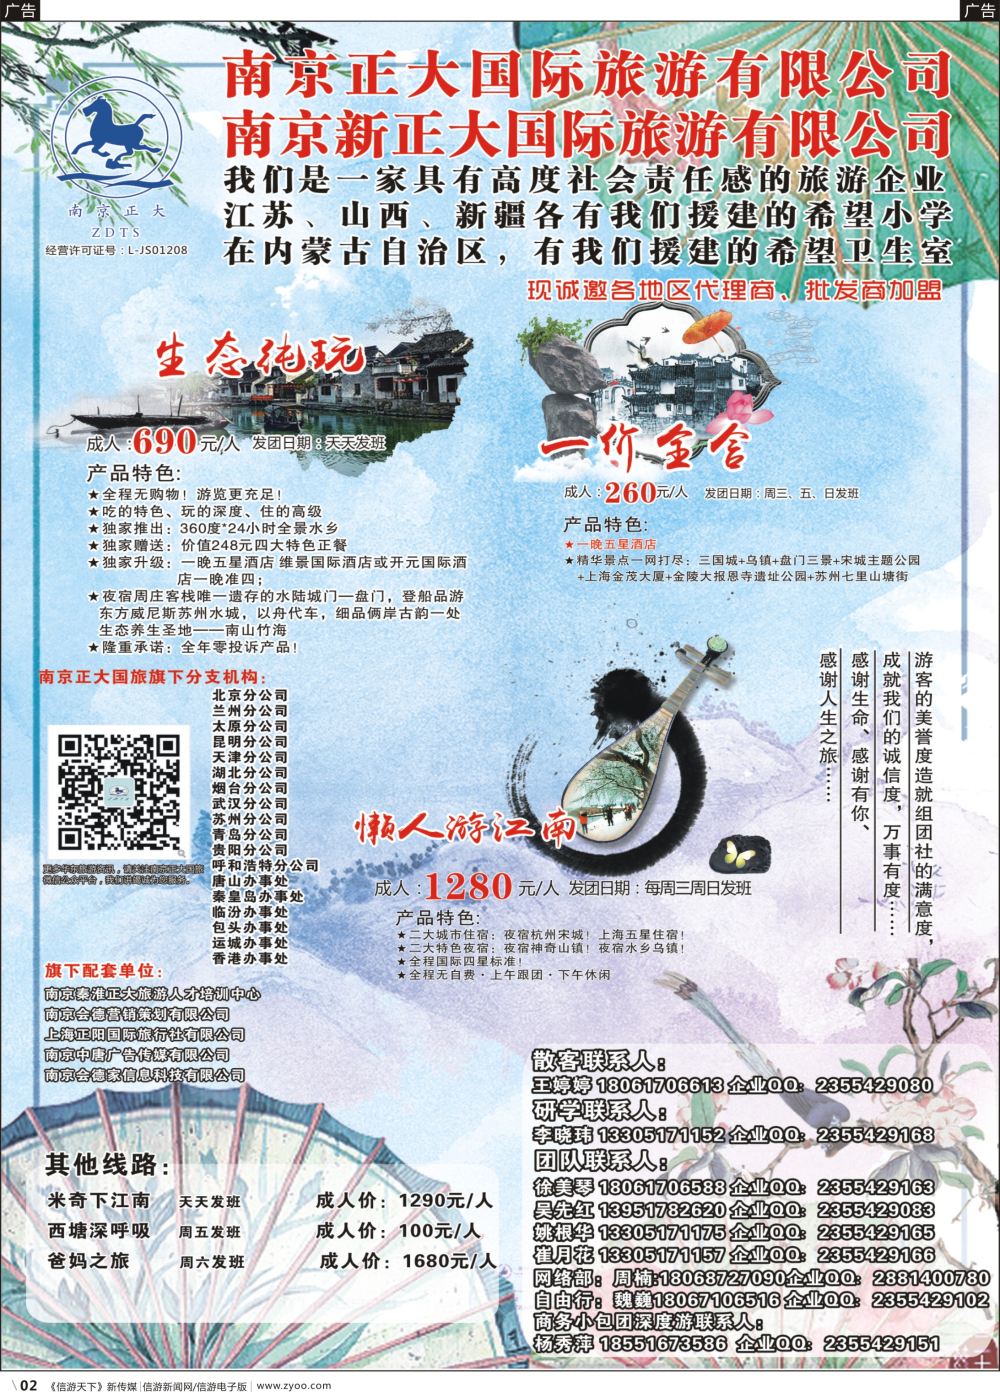 b002 南京正大国际旅游有限公司-华东专业地接